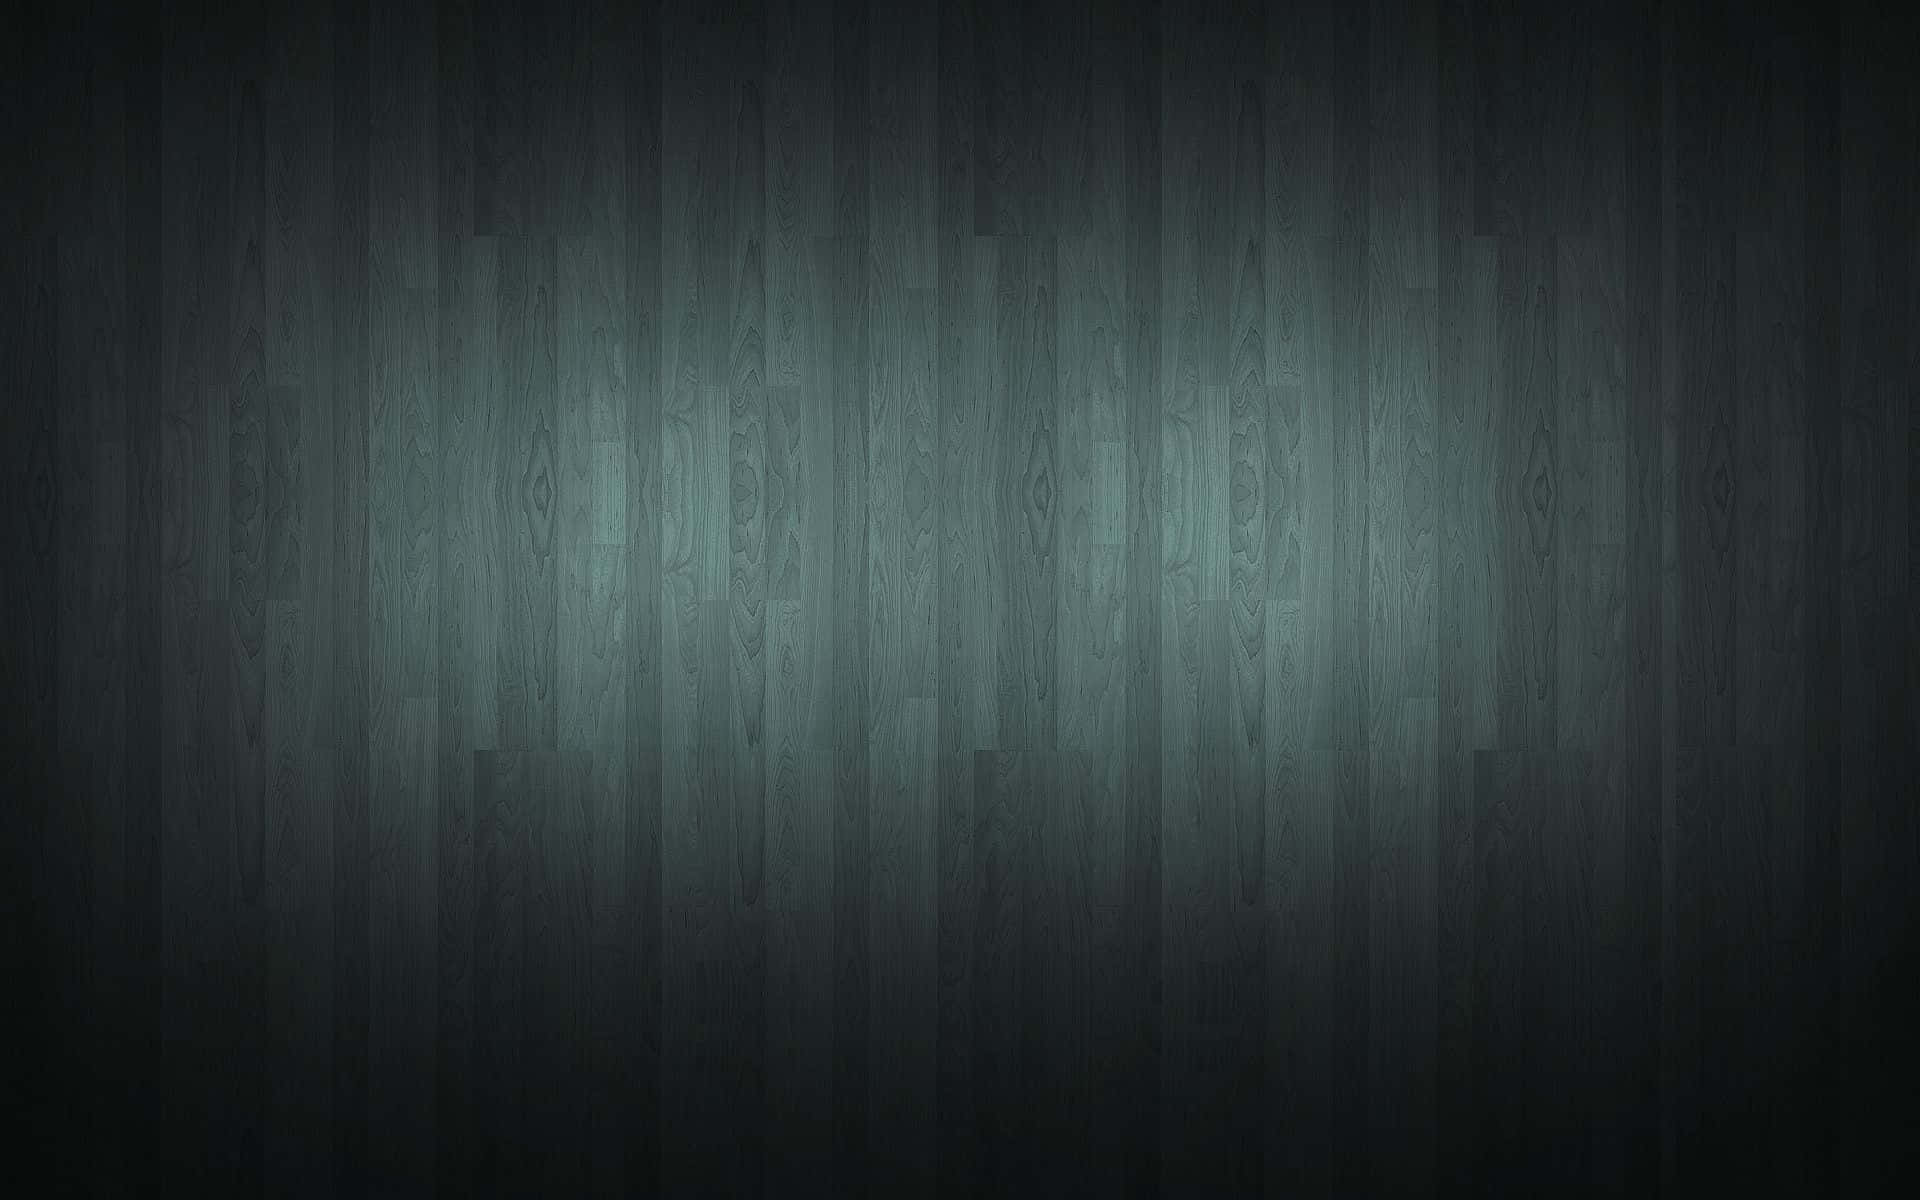 A Dark Wood Background With A Light Blue Light